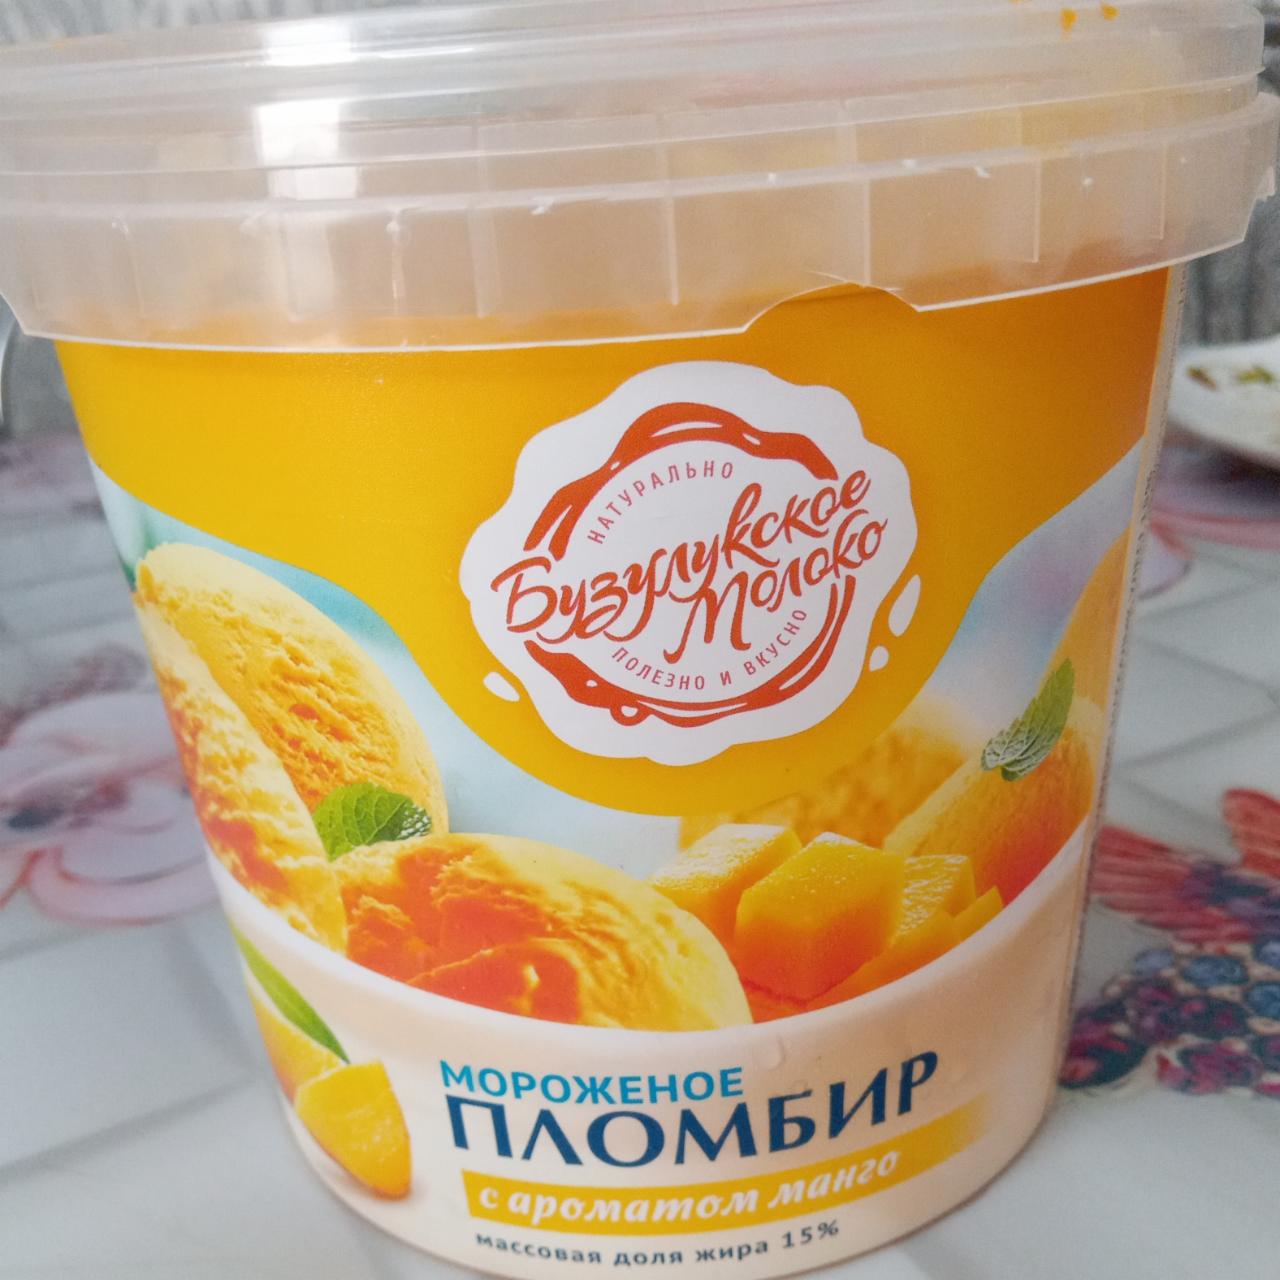 Фото - Мороженое пломбир с ароматом манго Бузулукское Молоко